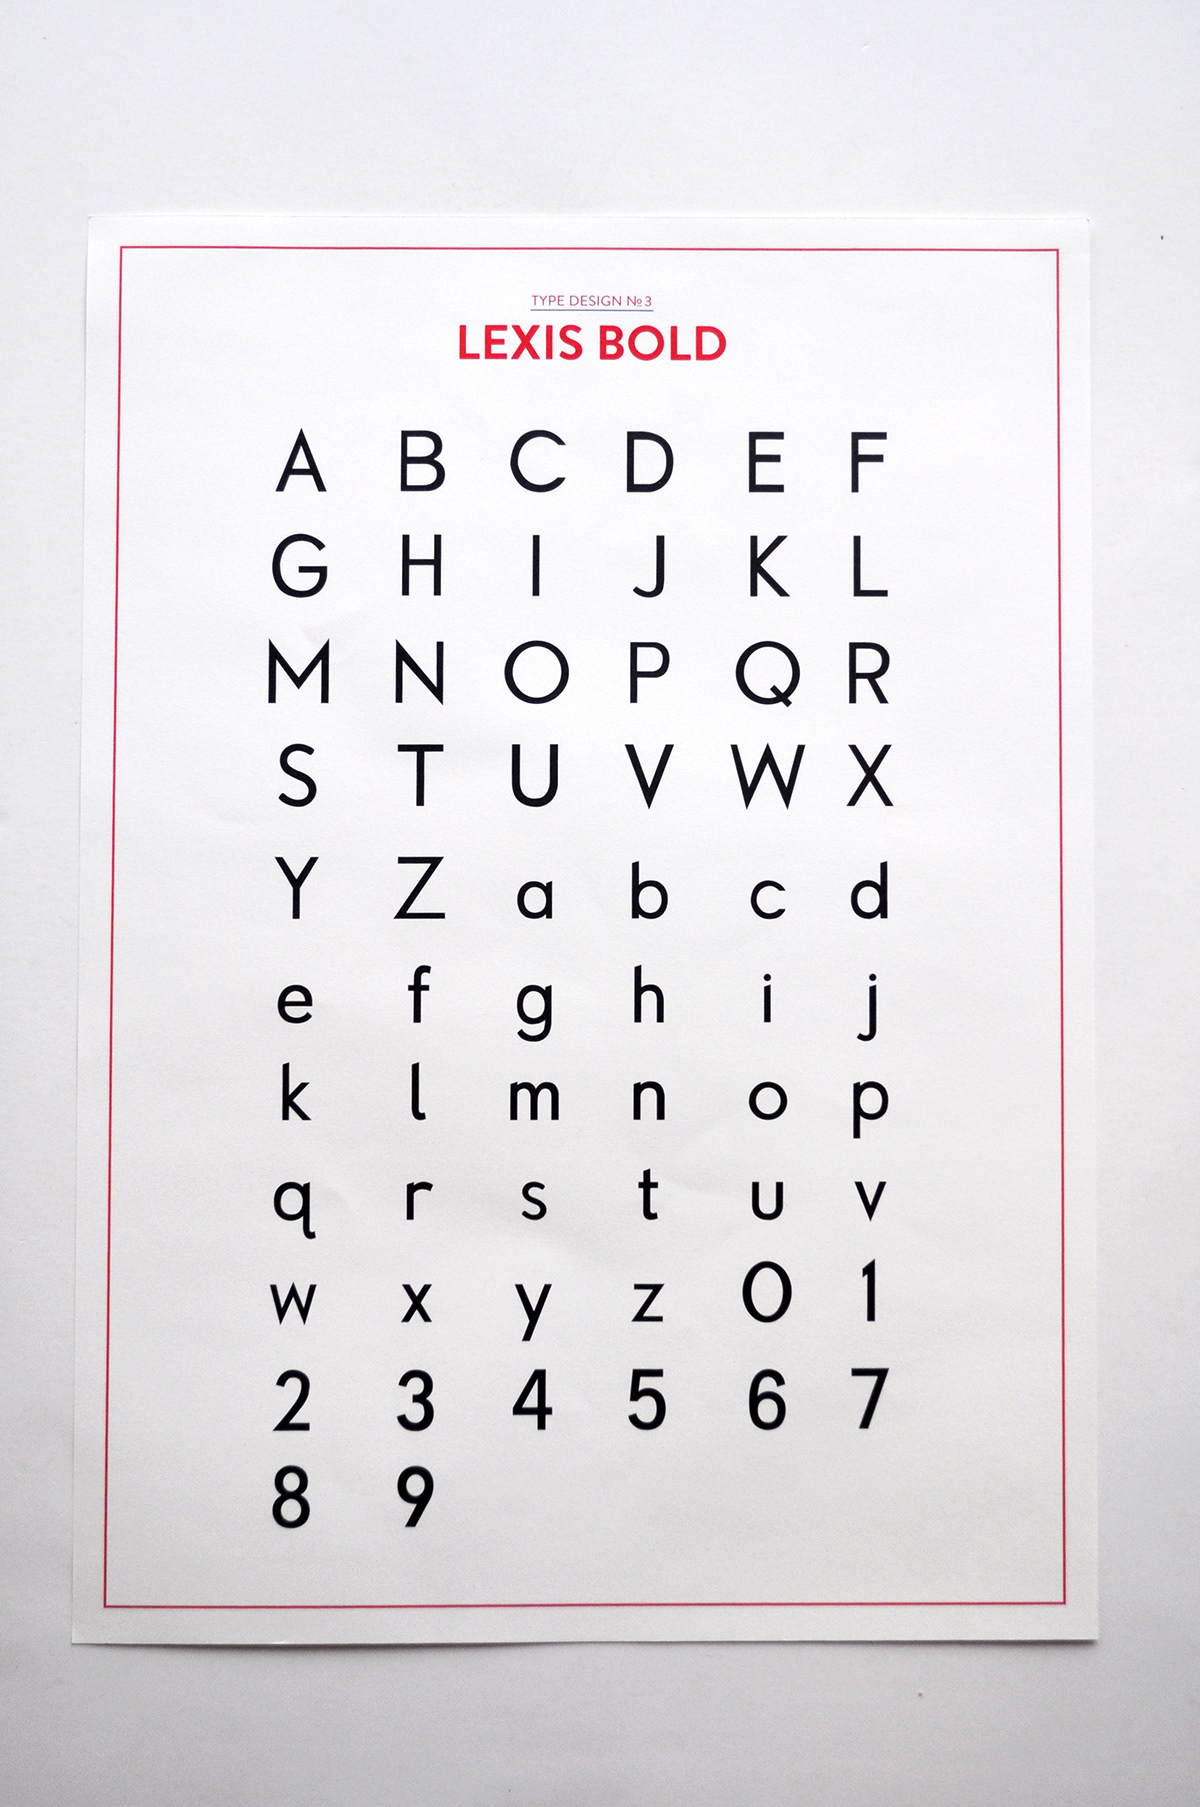 dyslexia lexis regular Typeface font